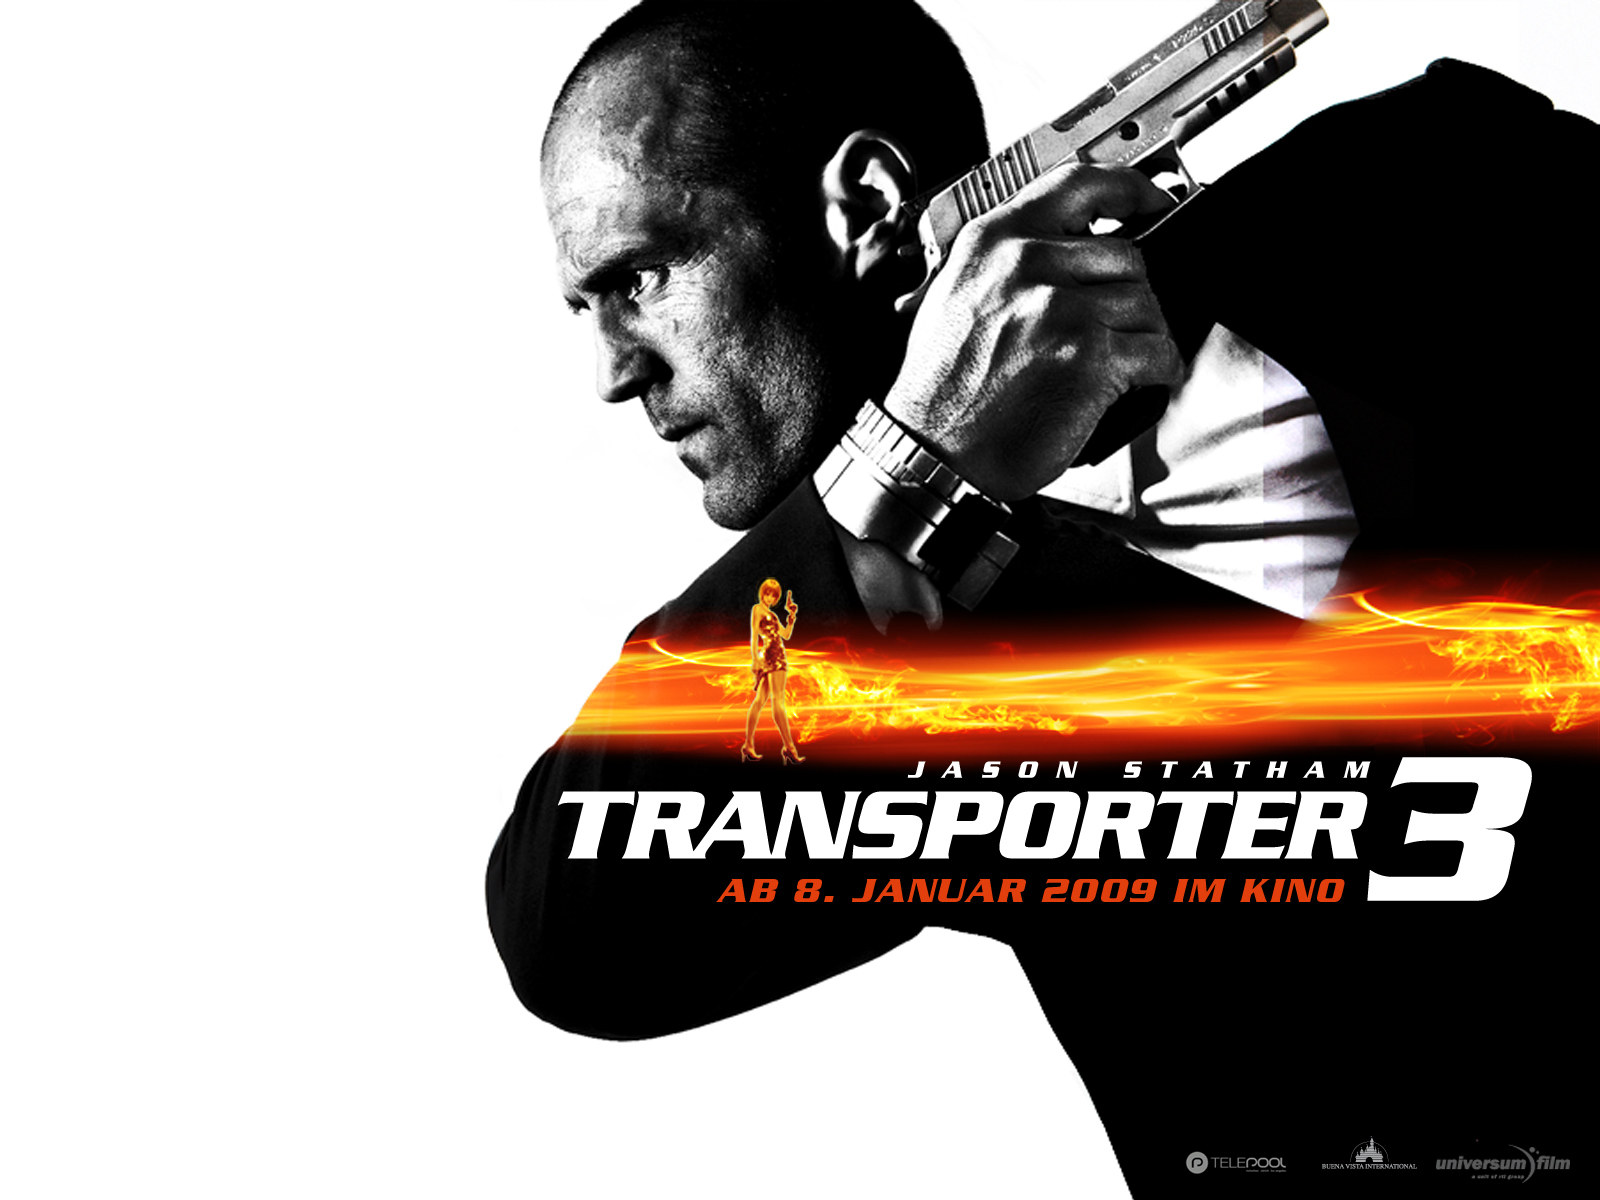 The Transporter 3 with Jason Statham